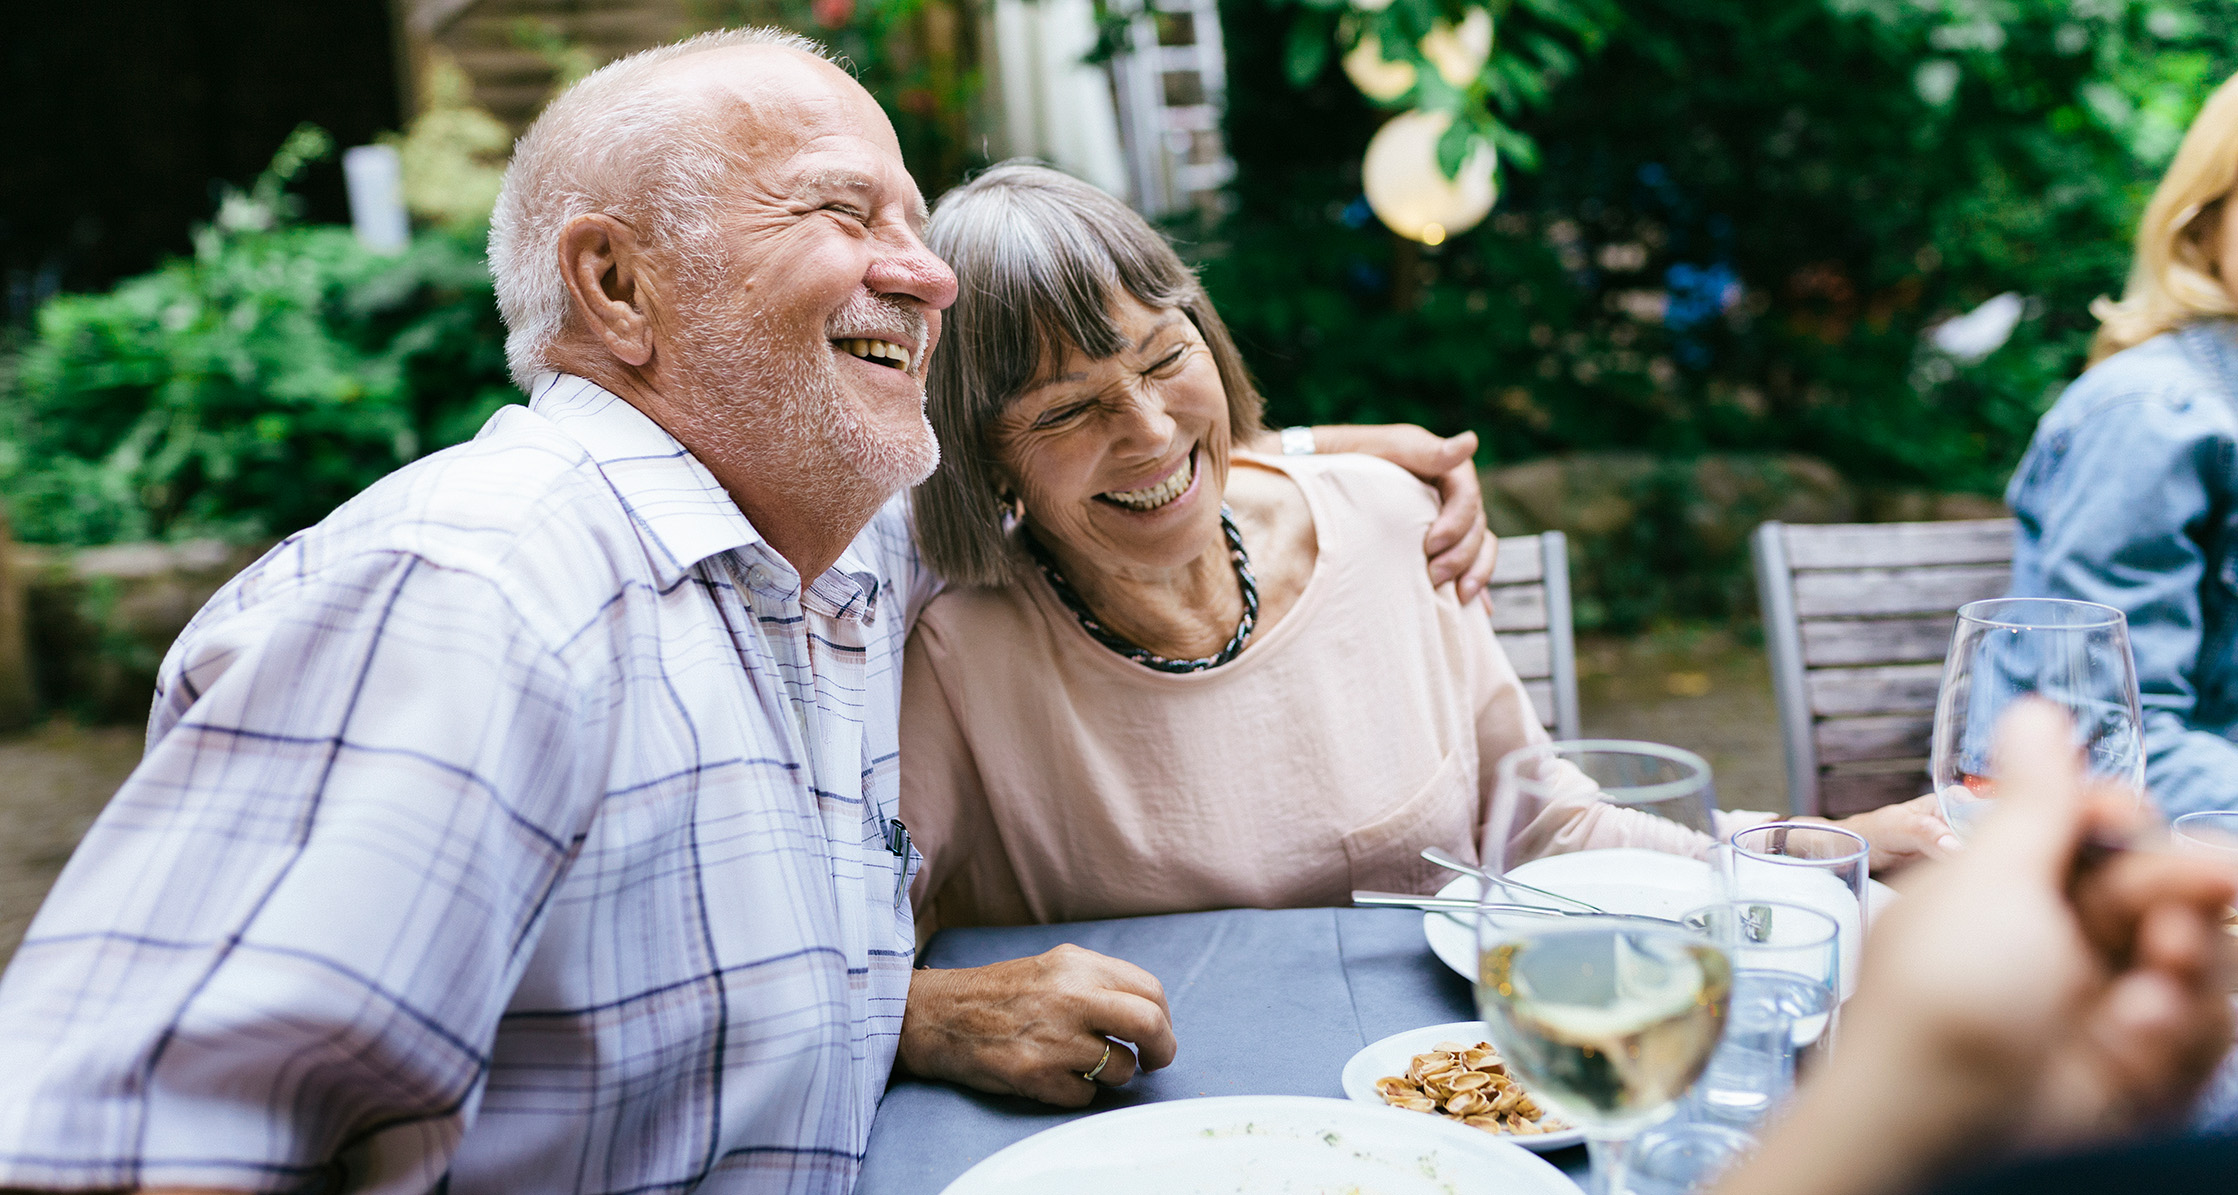 A senior couple enjoys an outdoor meal with family.